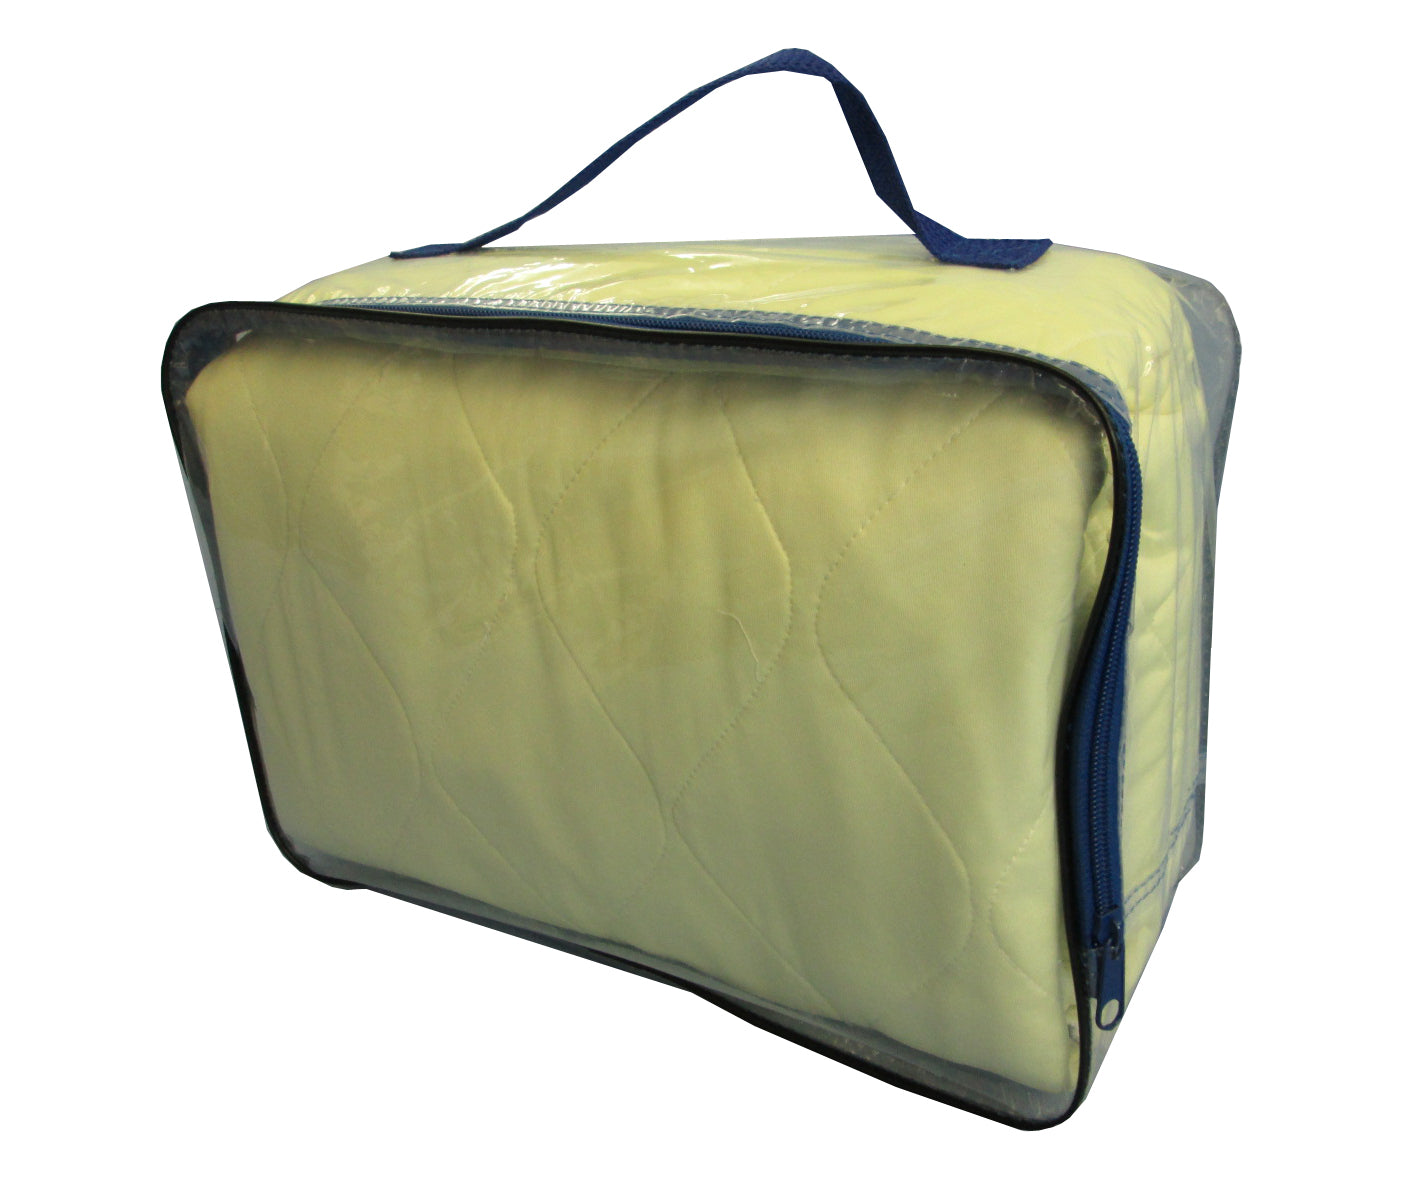 JLSB-0037 Sewn Bag